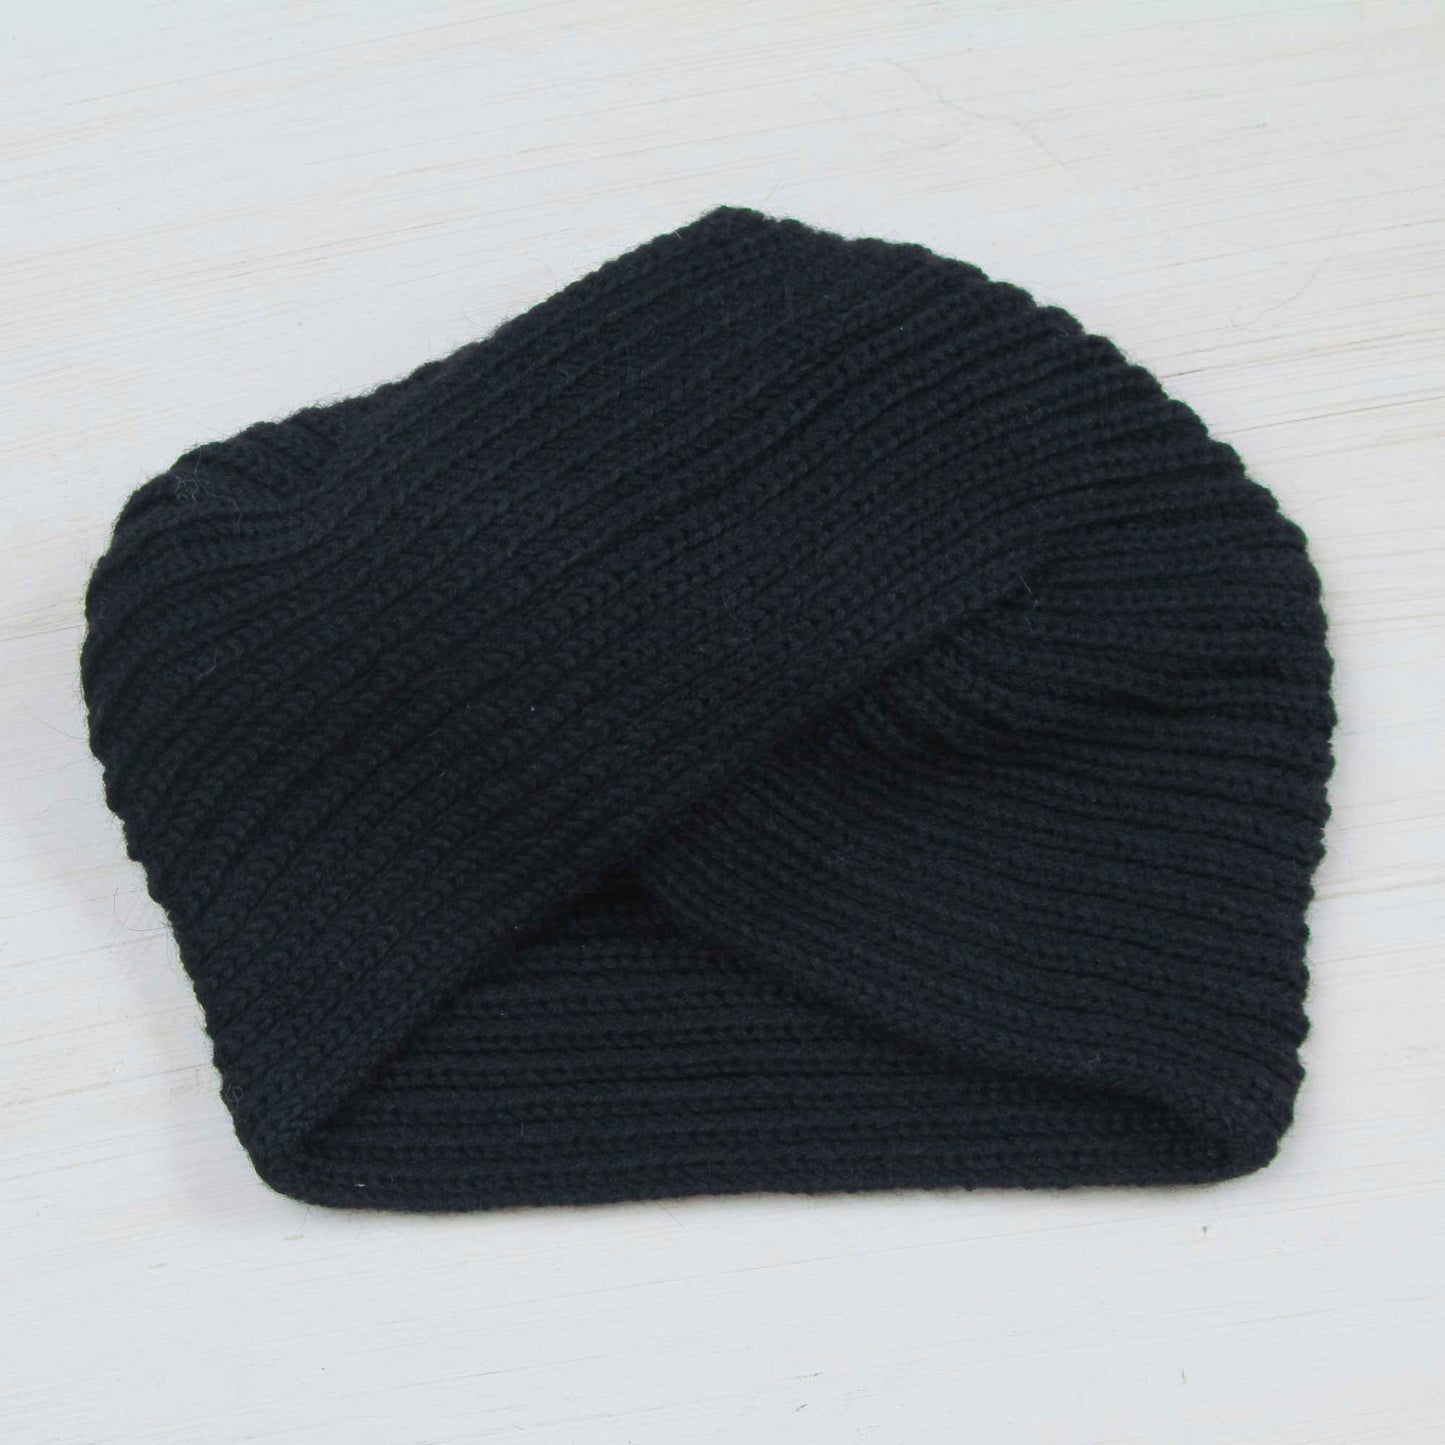 EbonyTurban Knitted Alpaca Blend Black Turban Style Hat from Peru